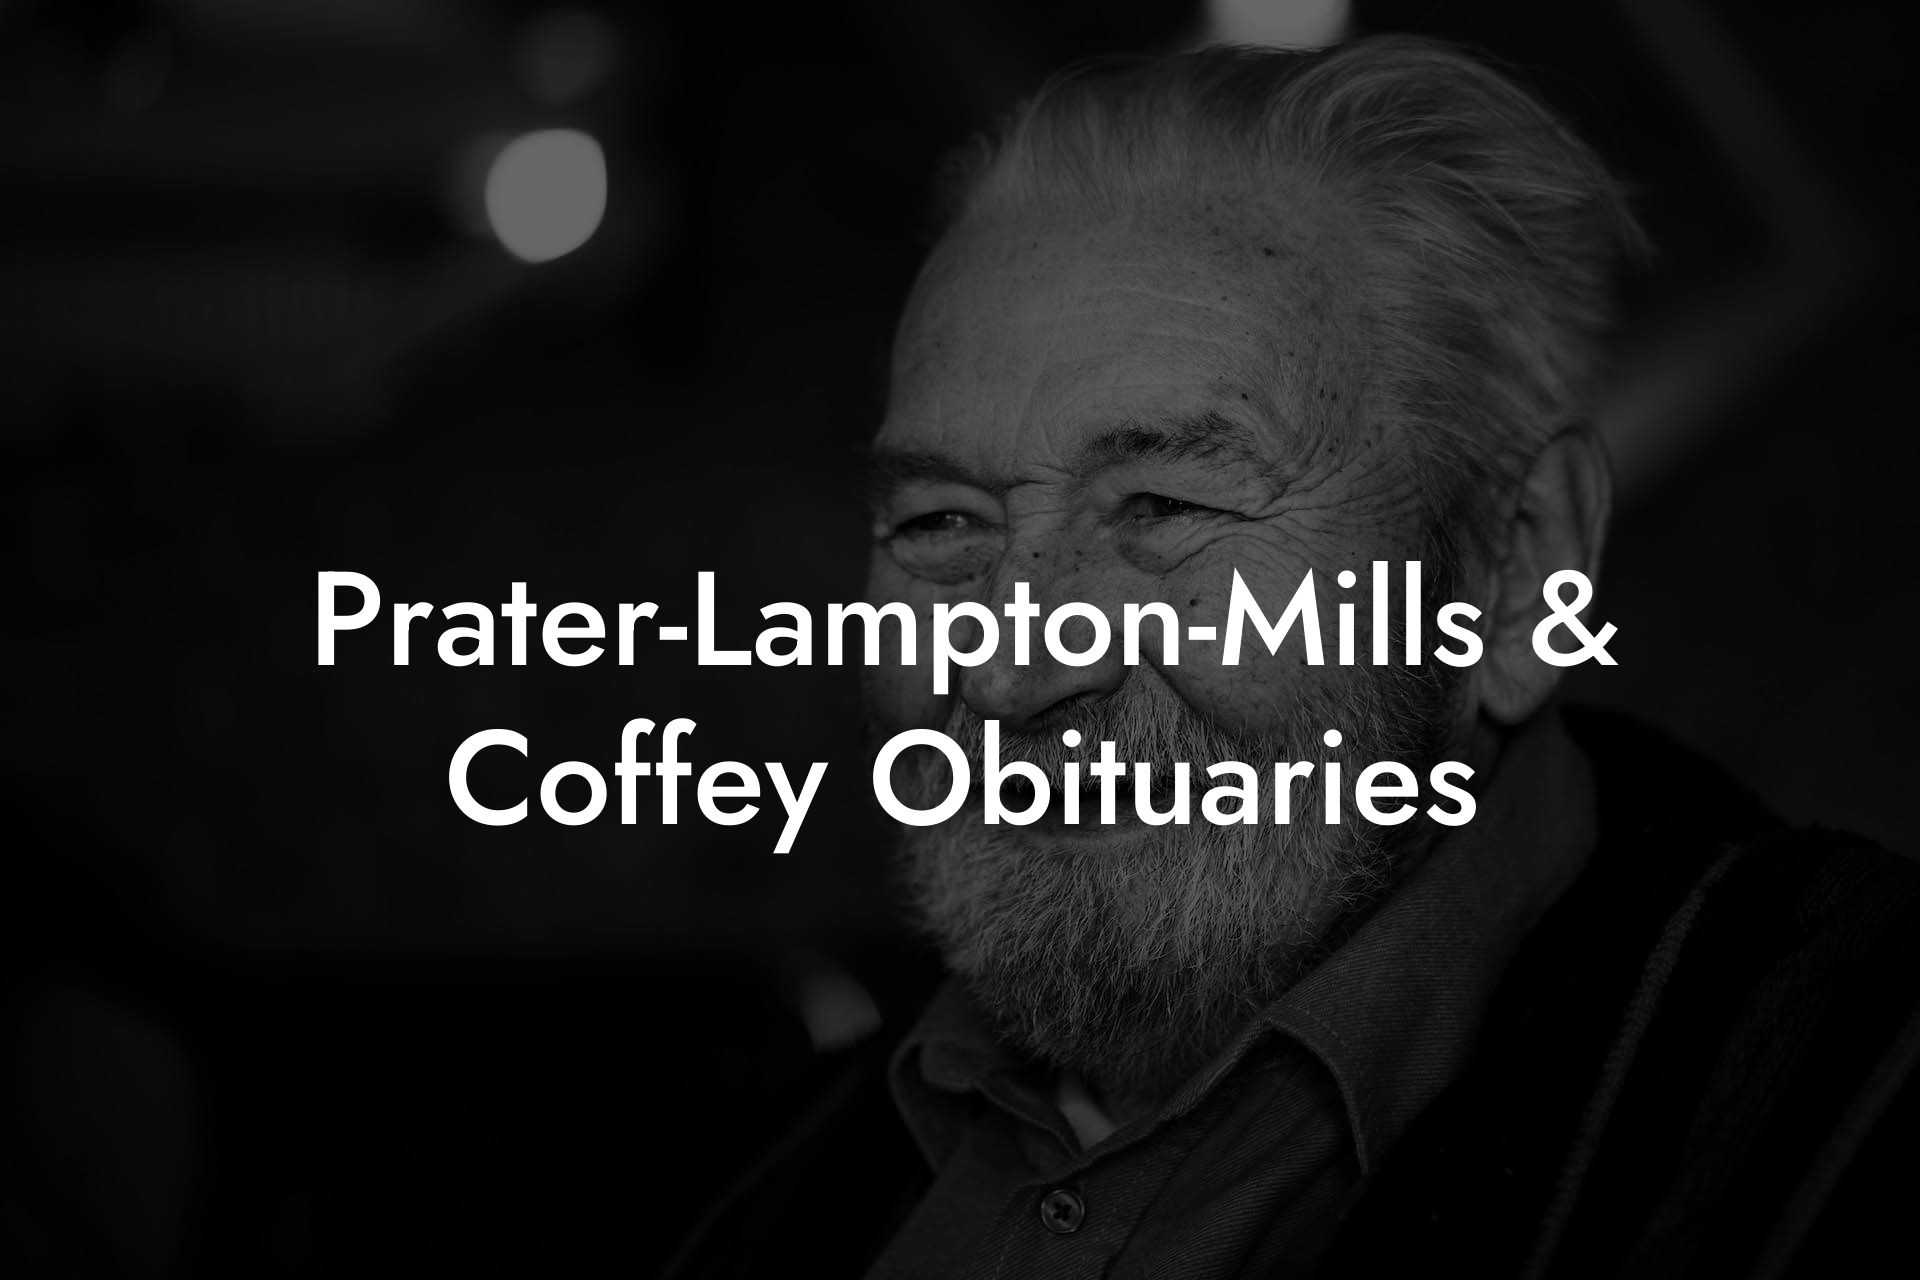 Prater-Lampton-Mills & Coffey Obituaries